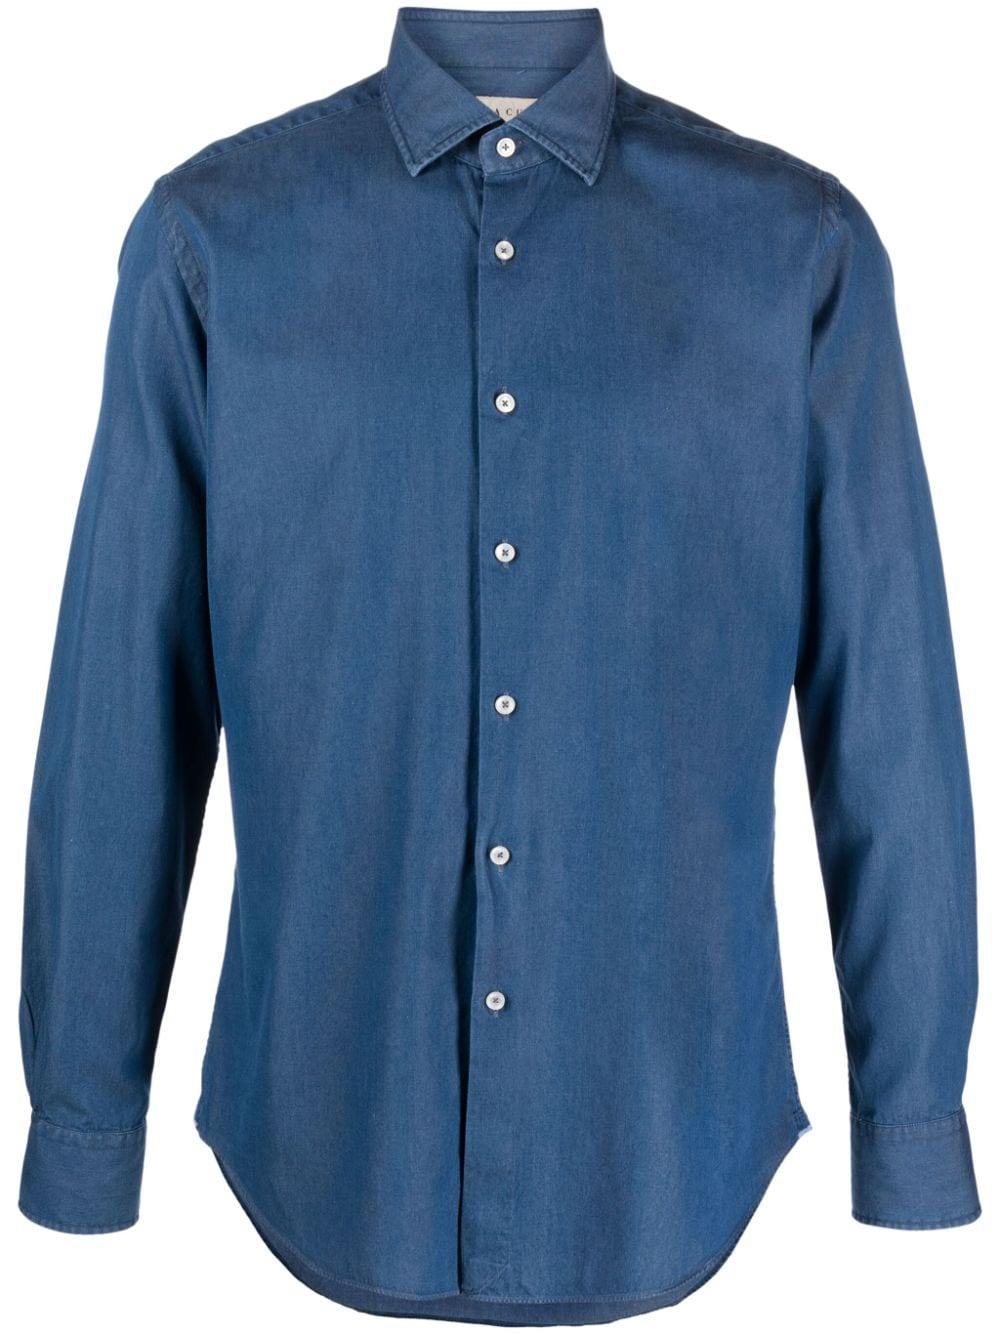 Xacus - cotton button-up shirt